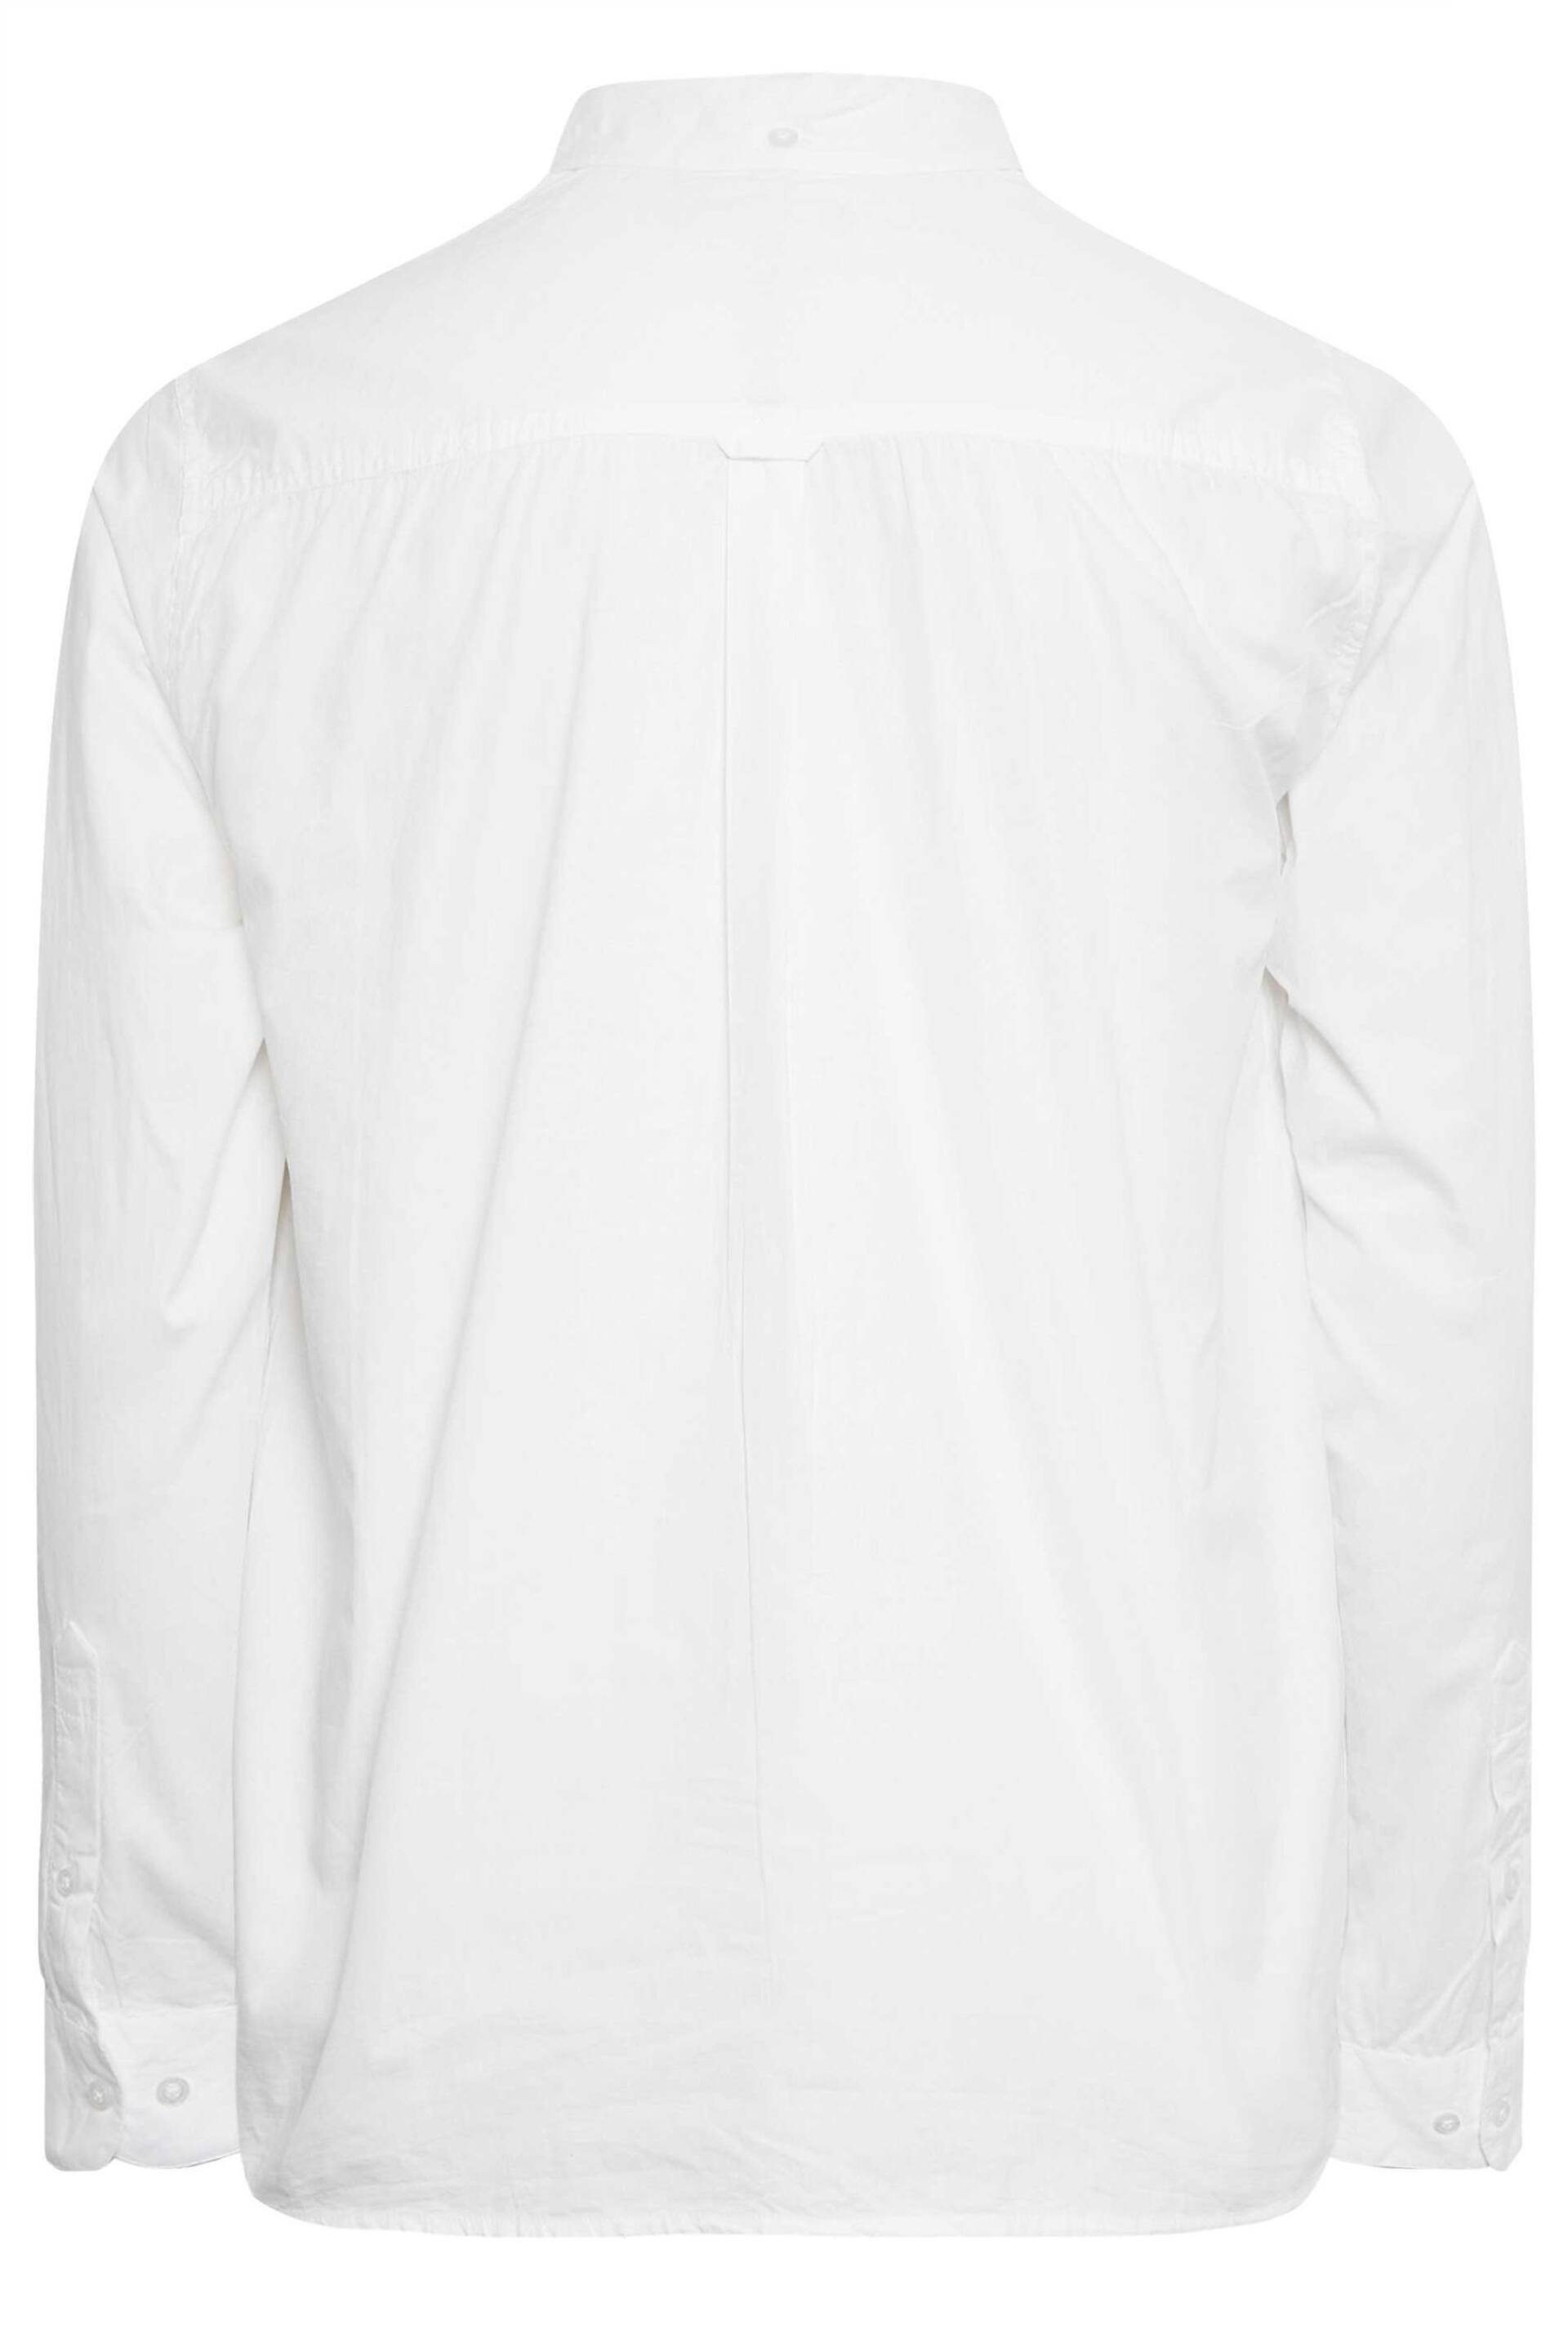 BadRhino Big & Tall White Long Sleeve Poplin Shirt - Image 3 of 3